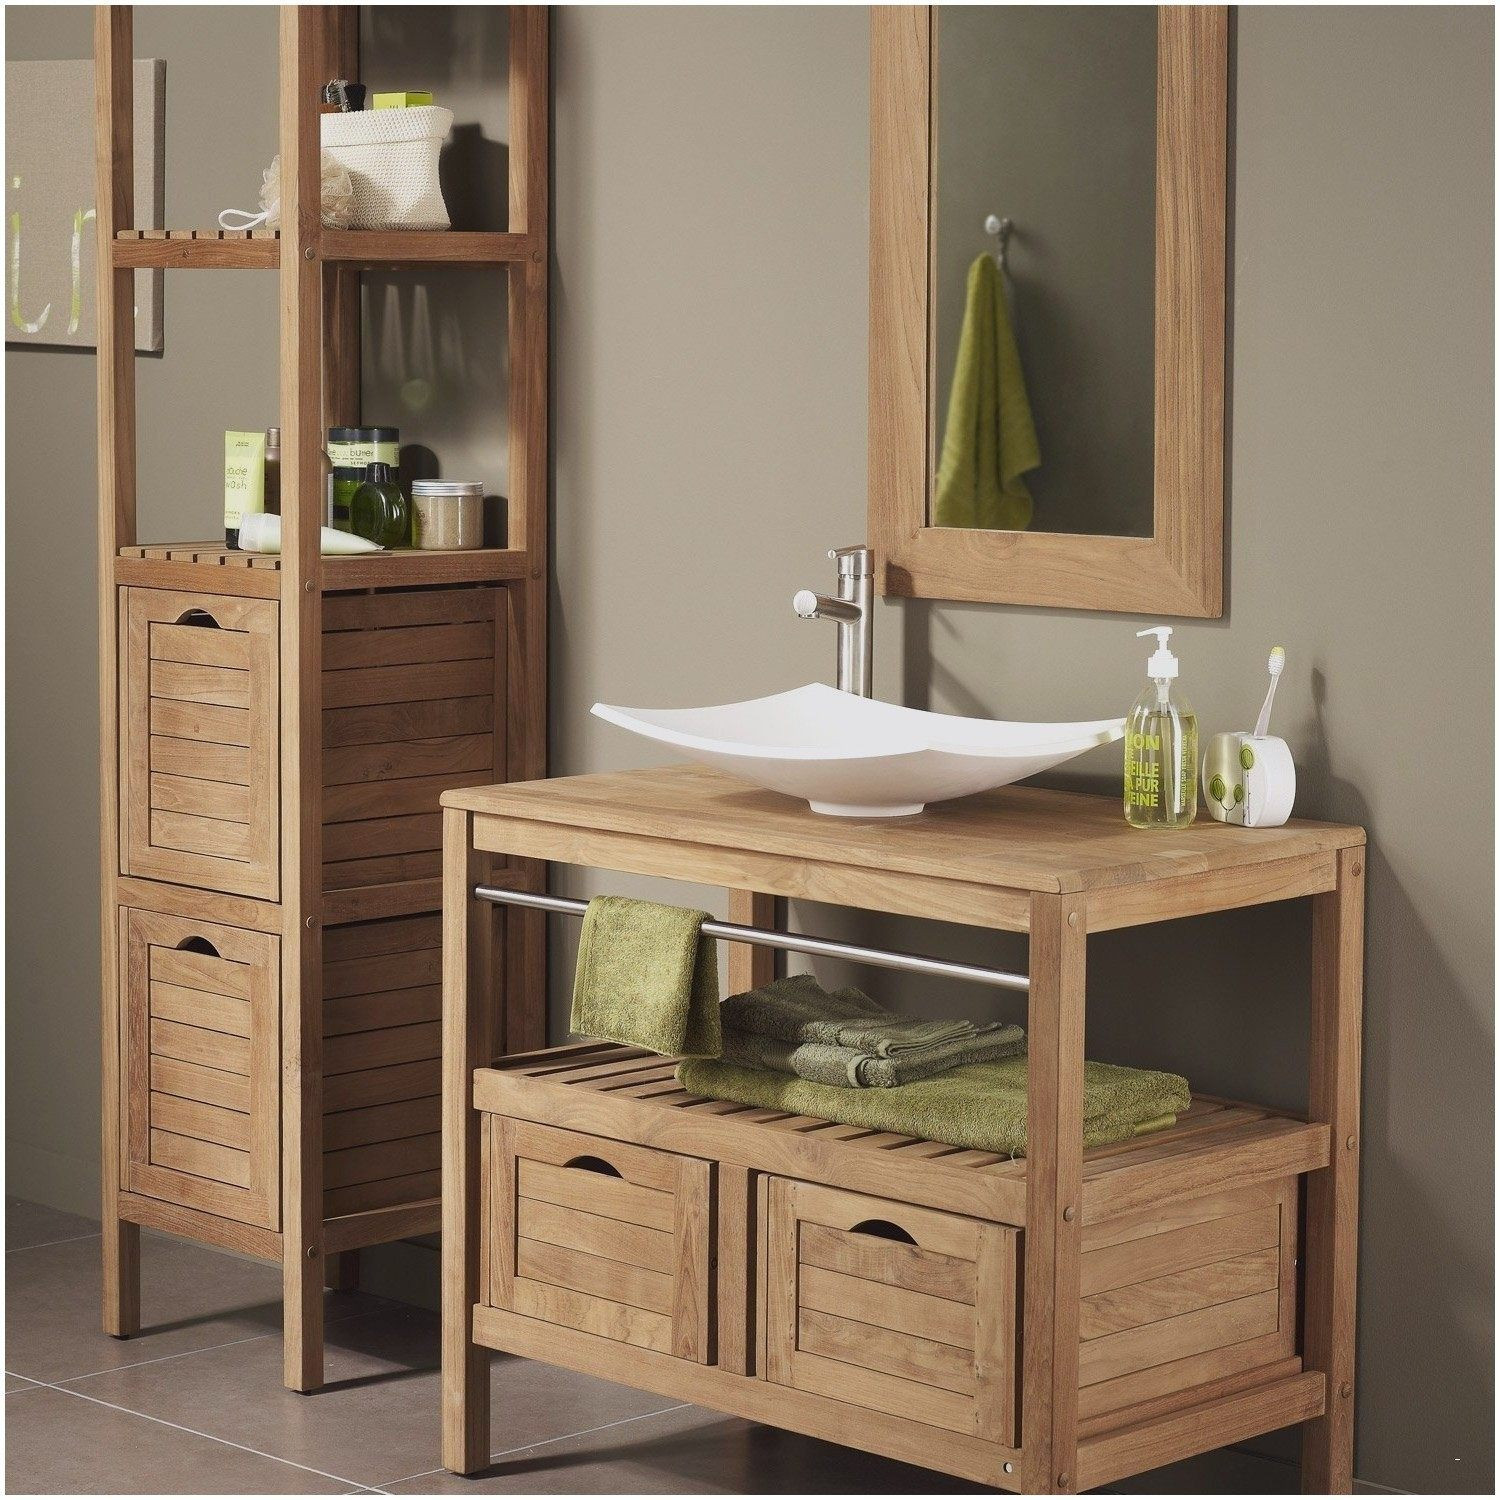 meuble en bois meuble salle de bain bois pas cher meubles en teck charmant meuble of meuble en bois